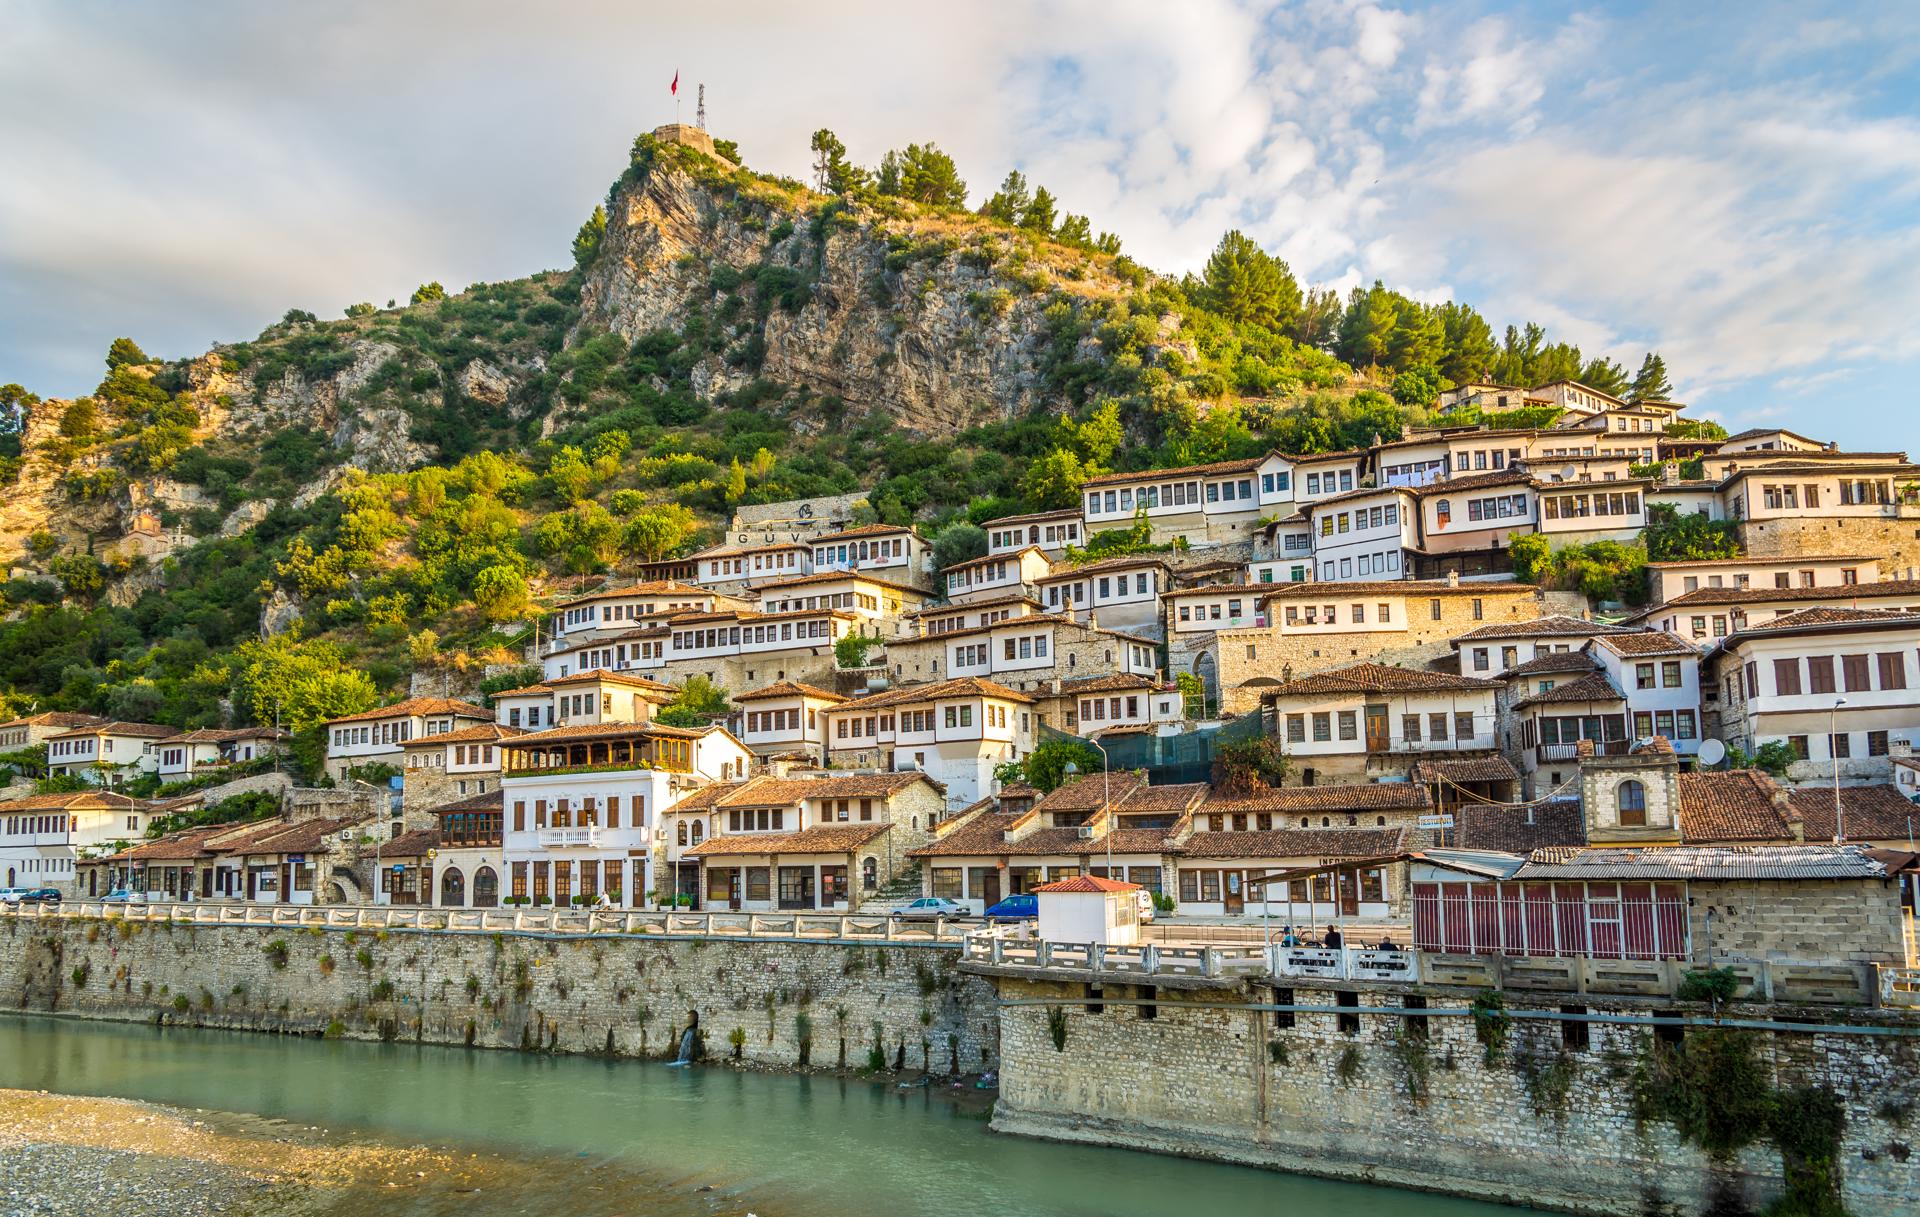 Most Spiritual Places On Earth
Berat Albania - spiritual places